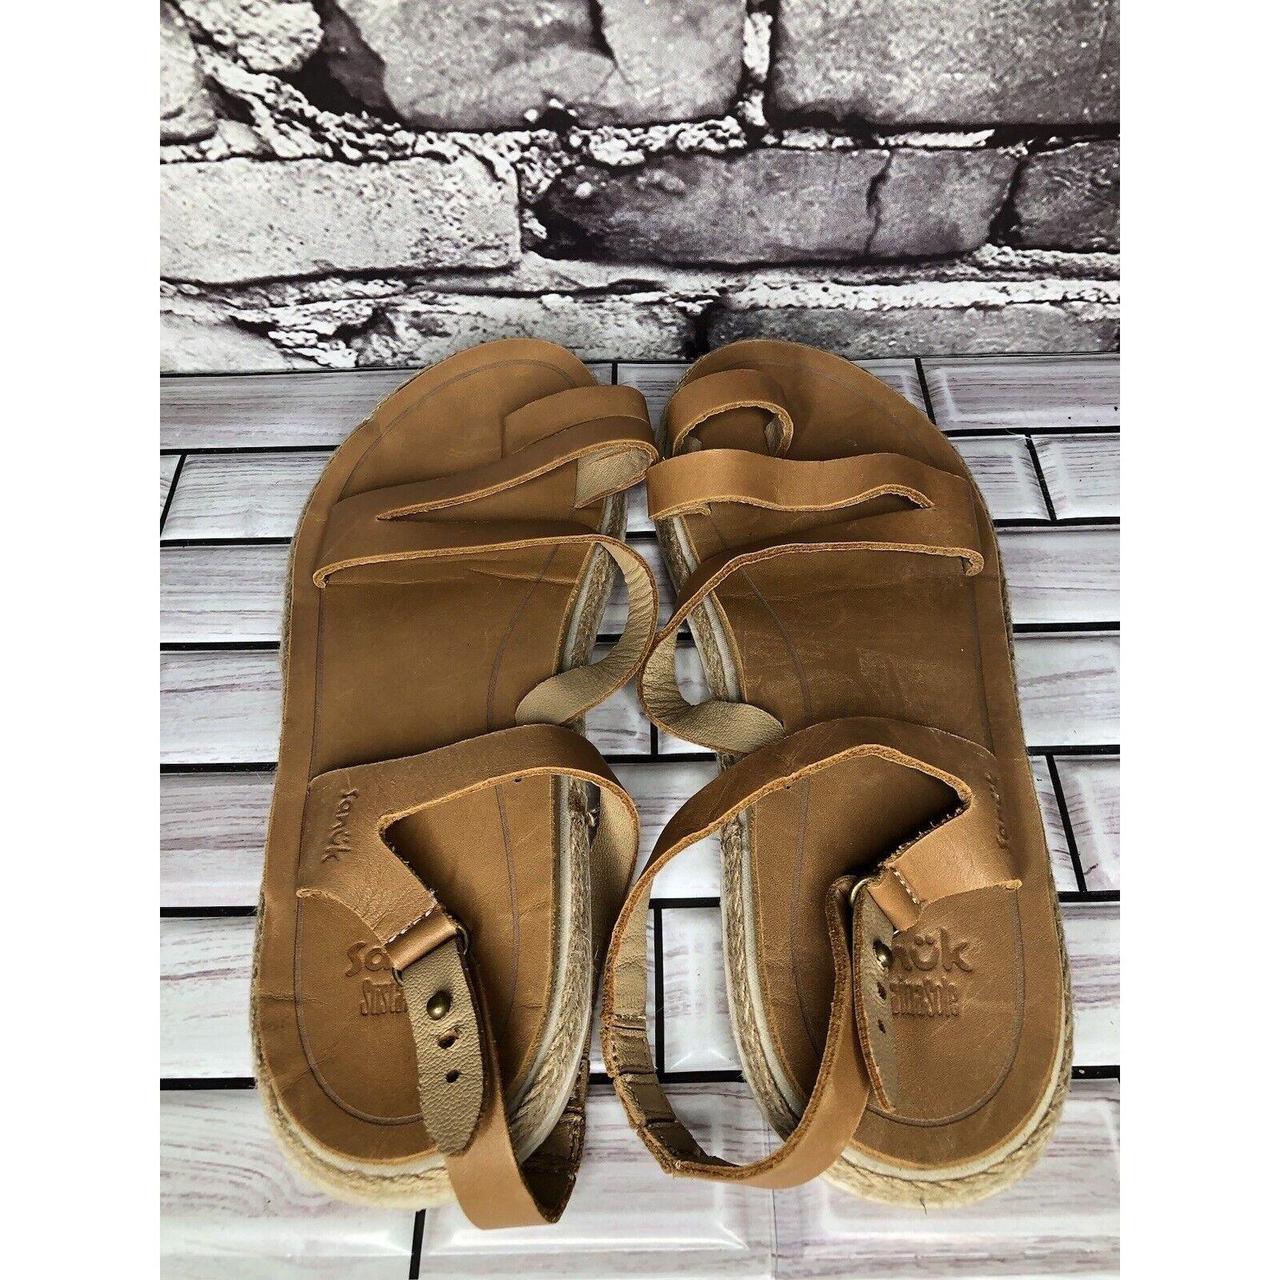 Sanuk Vazon Sustainasole x Grateful Dead strappy leather sandal Size 6 -  $49 - From Liv